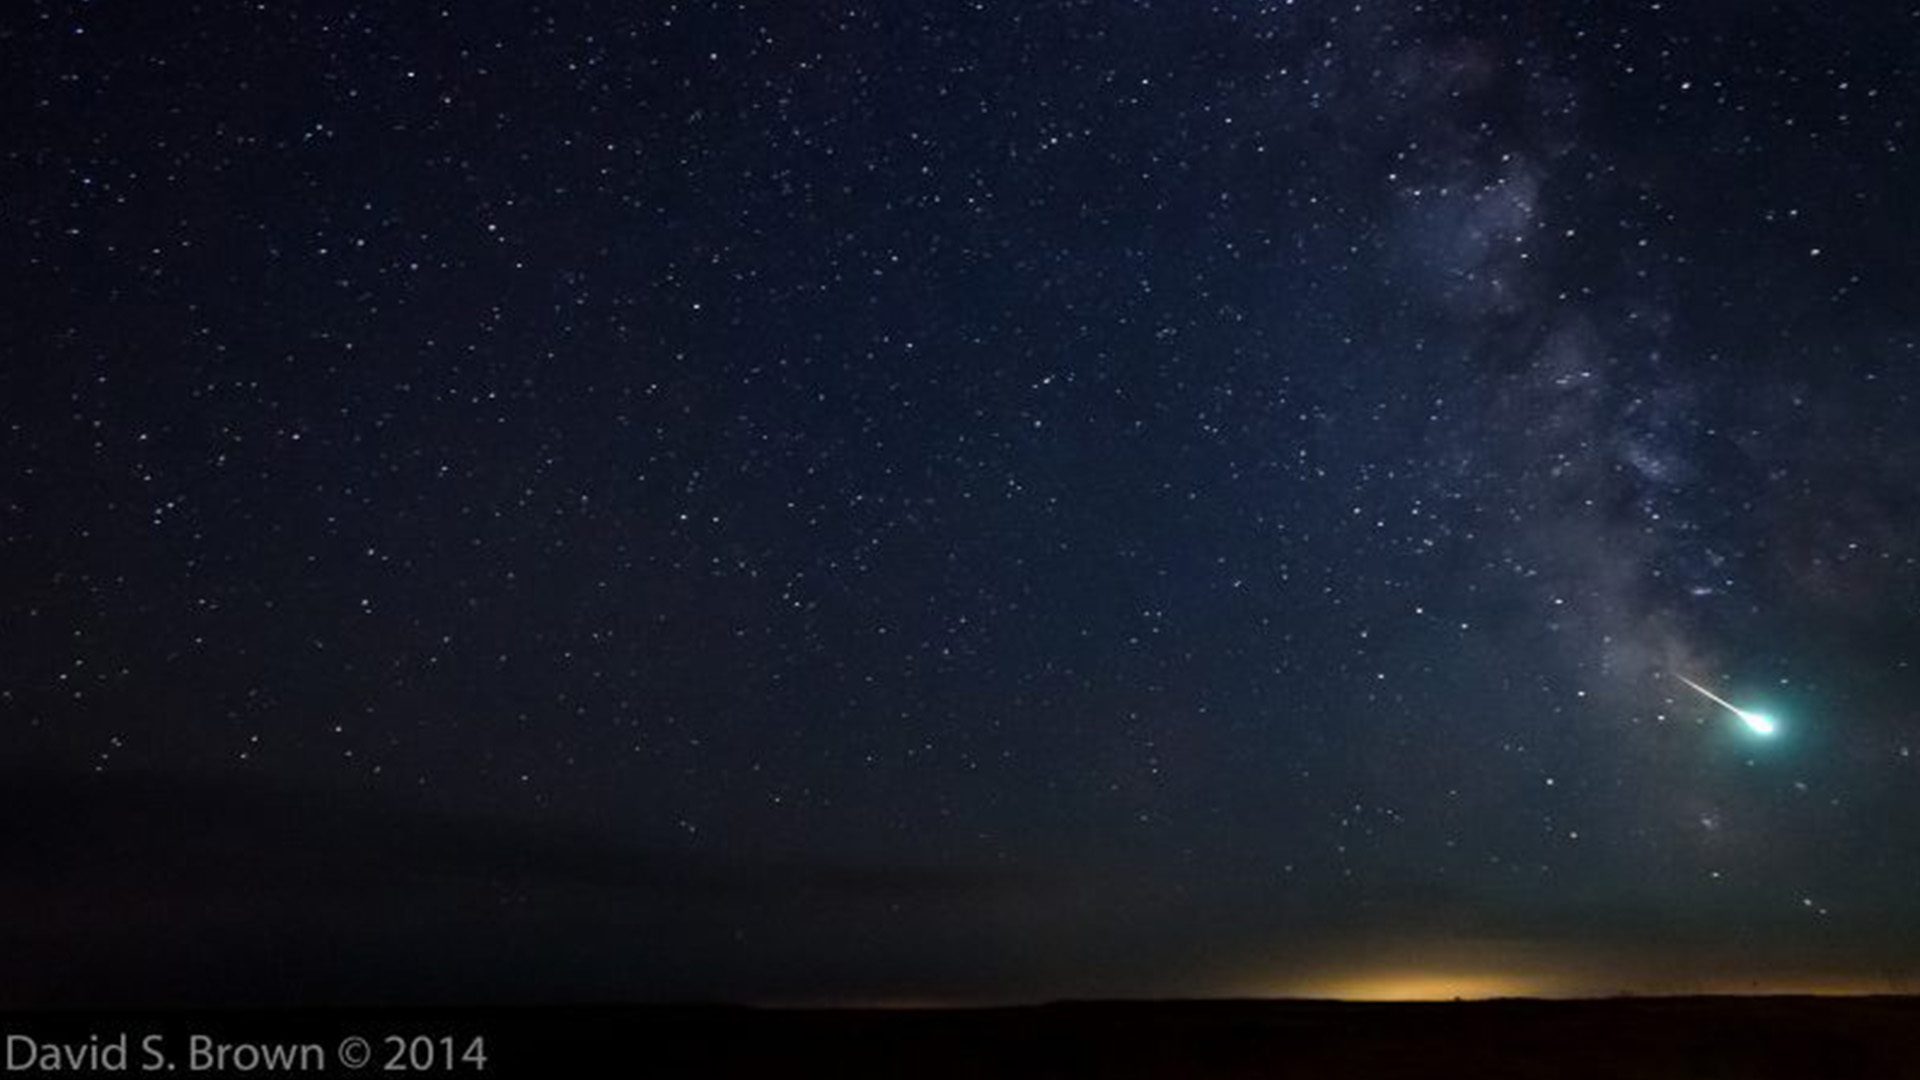 Delta Aquariid Meteor Shower in July 2014; Photo Credit: David S. Brown